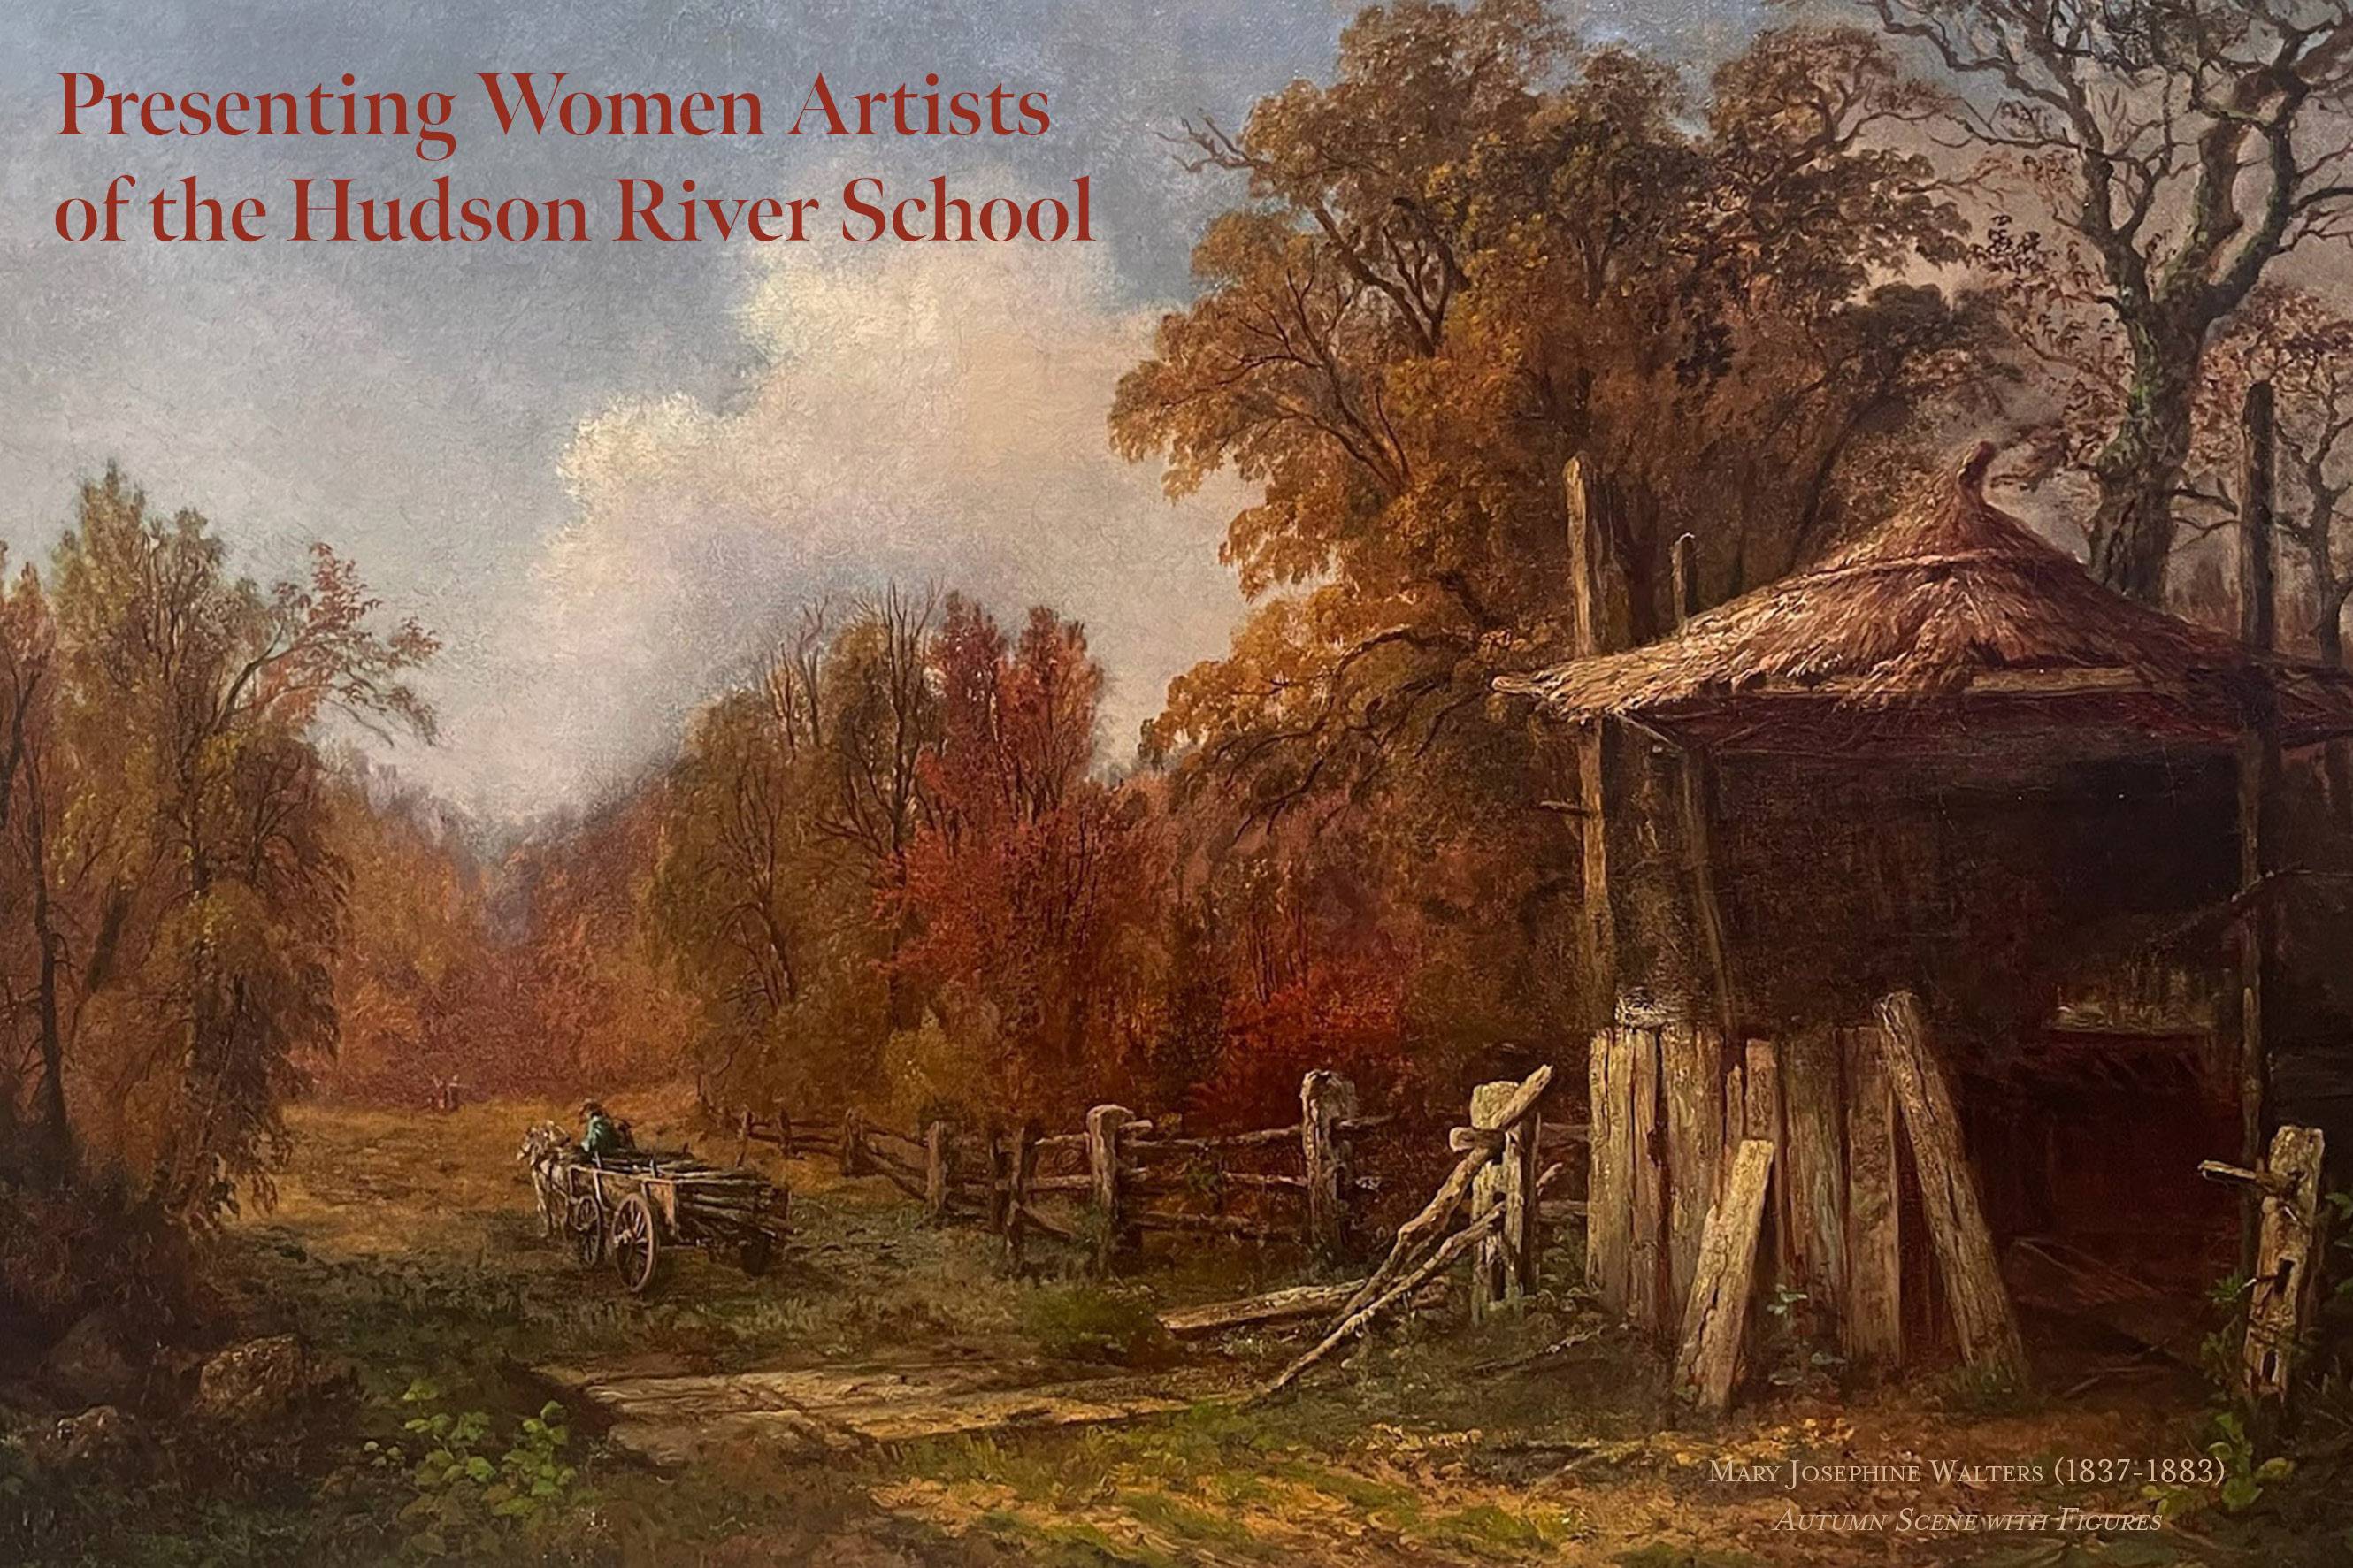 Presenting Women Artists of the Hudson River School